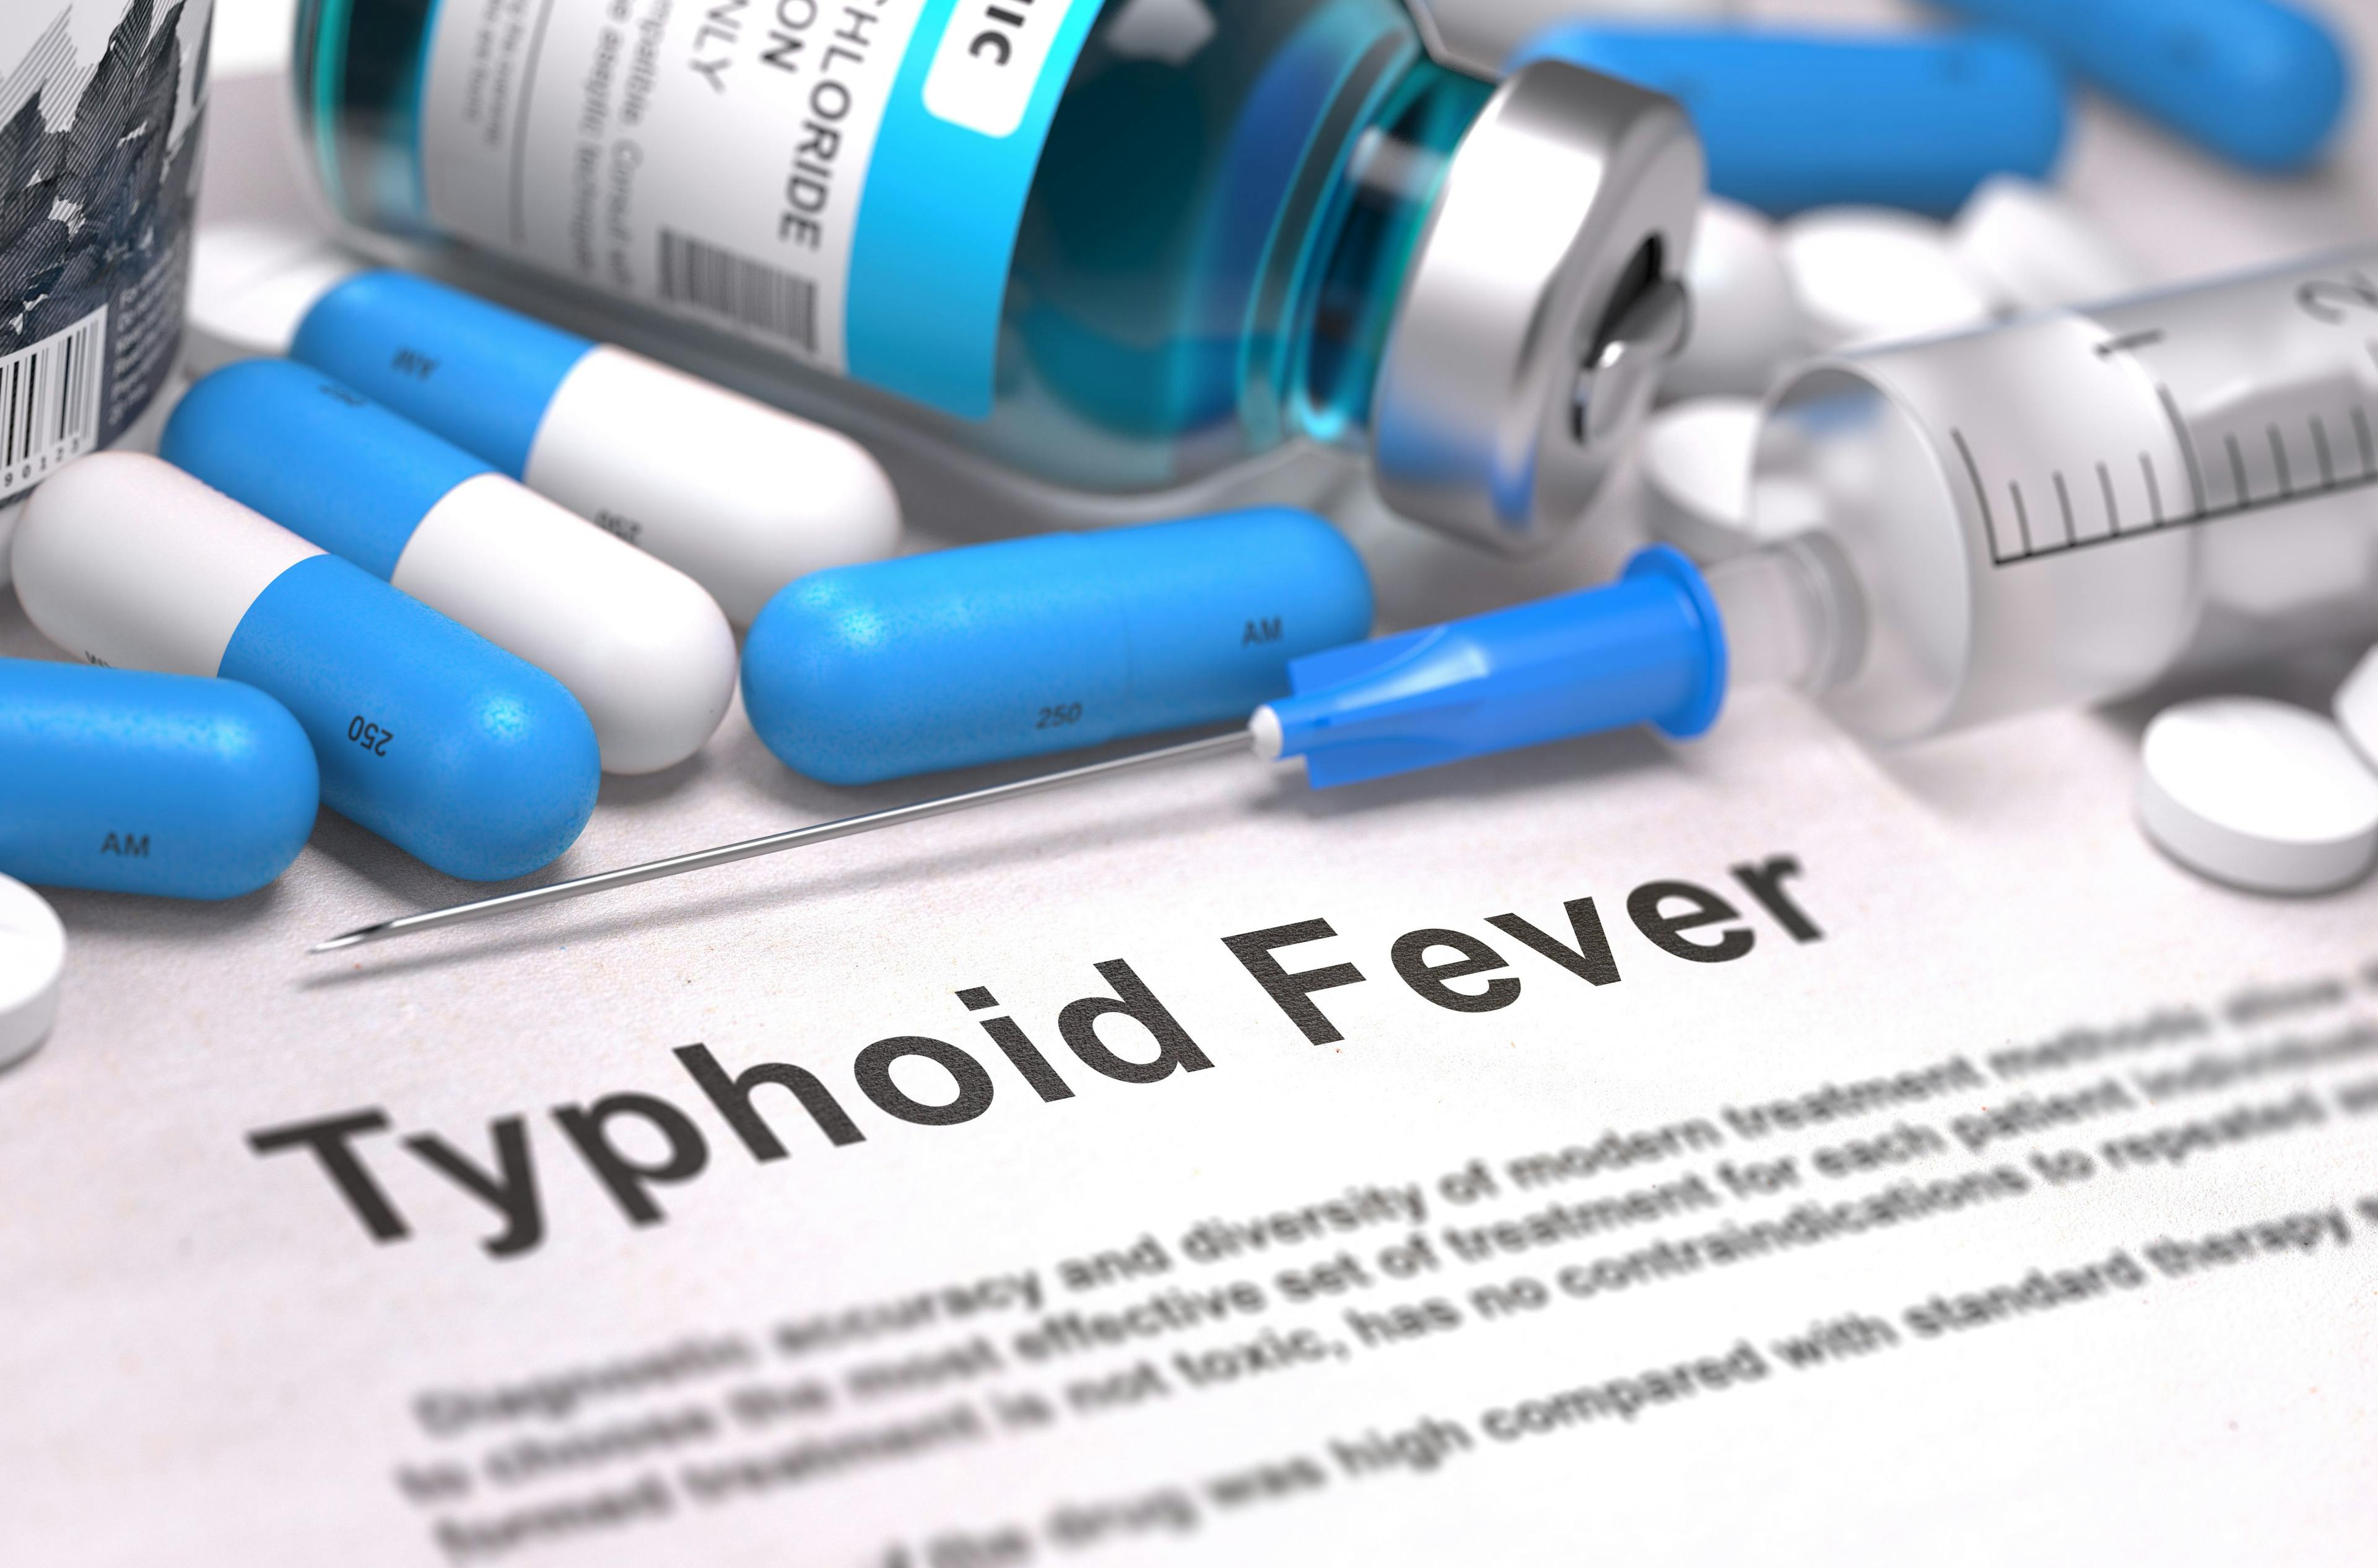 Image credit: tashatuvango | stock.adobe.com. Diagnosis - Typhoid Fever. Medical Concept. 3D Render.